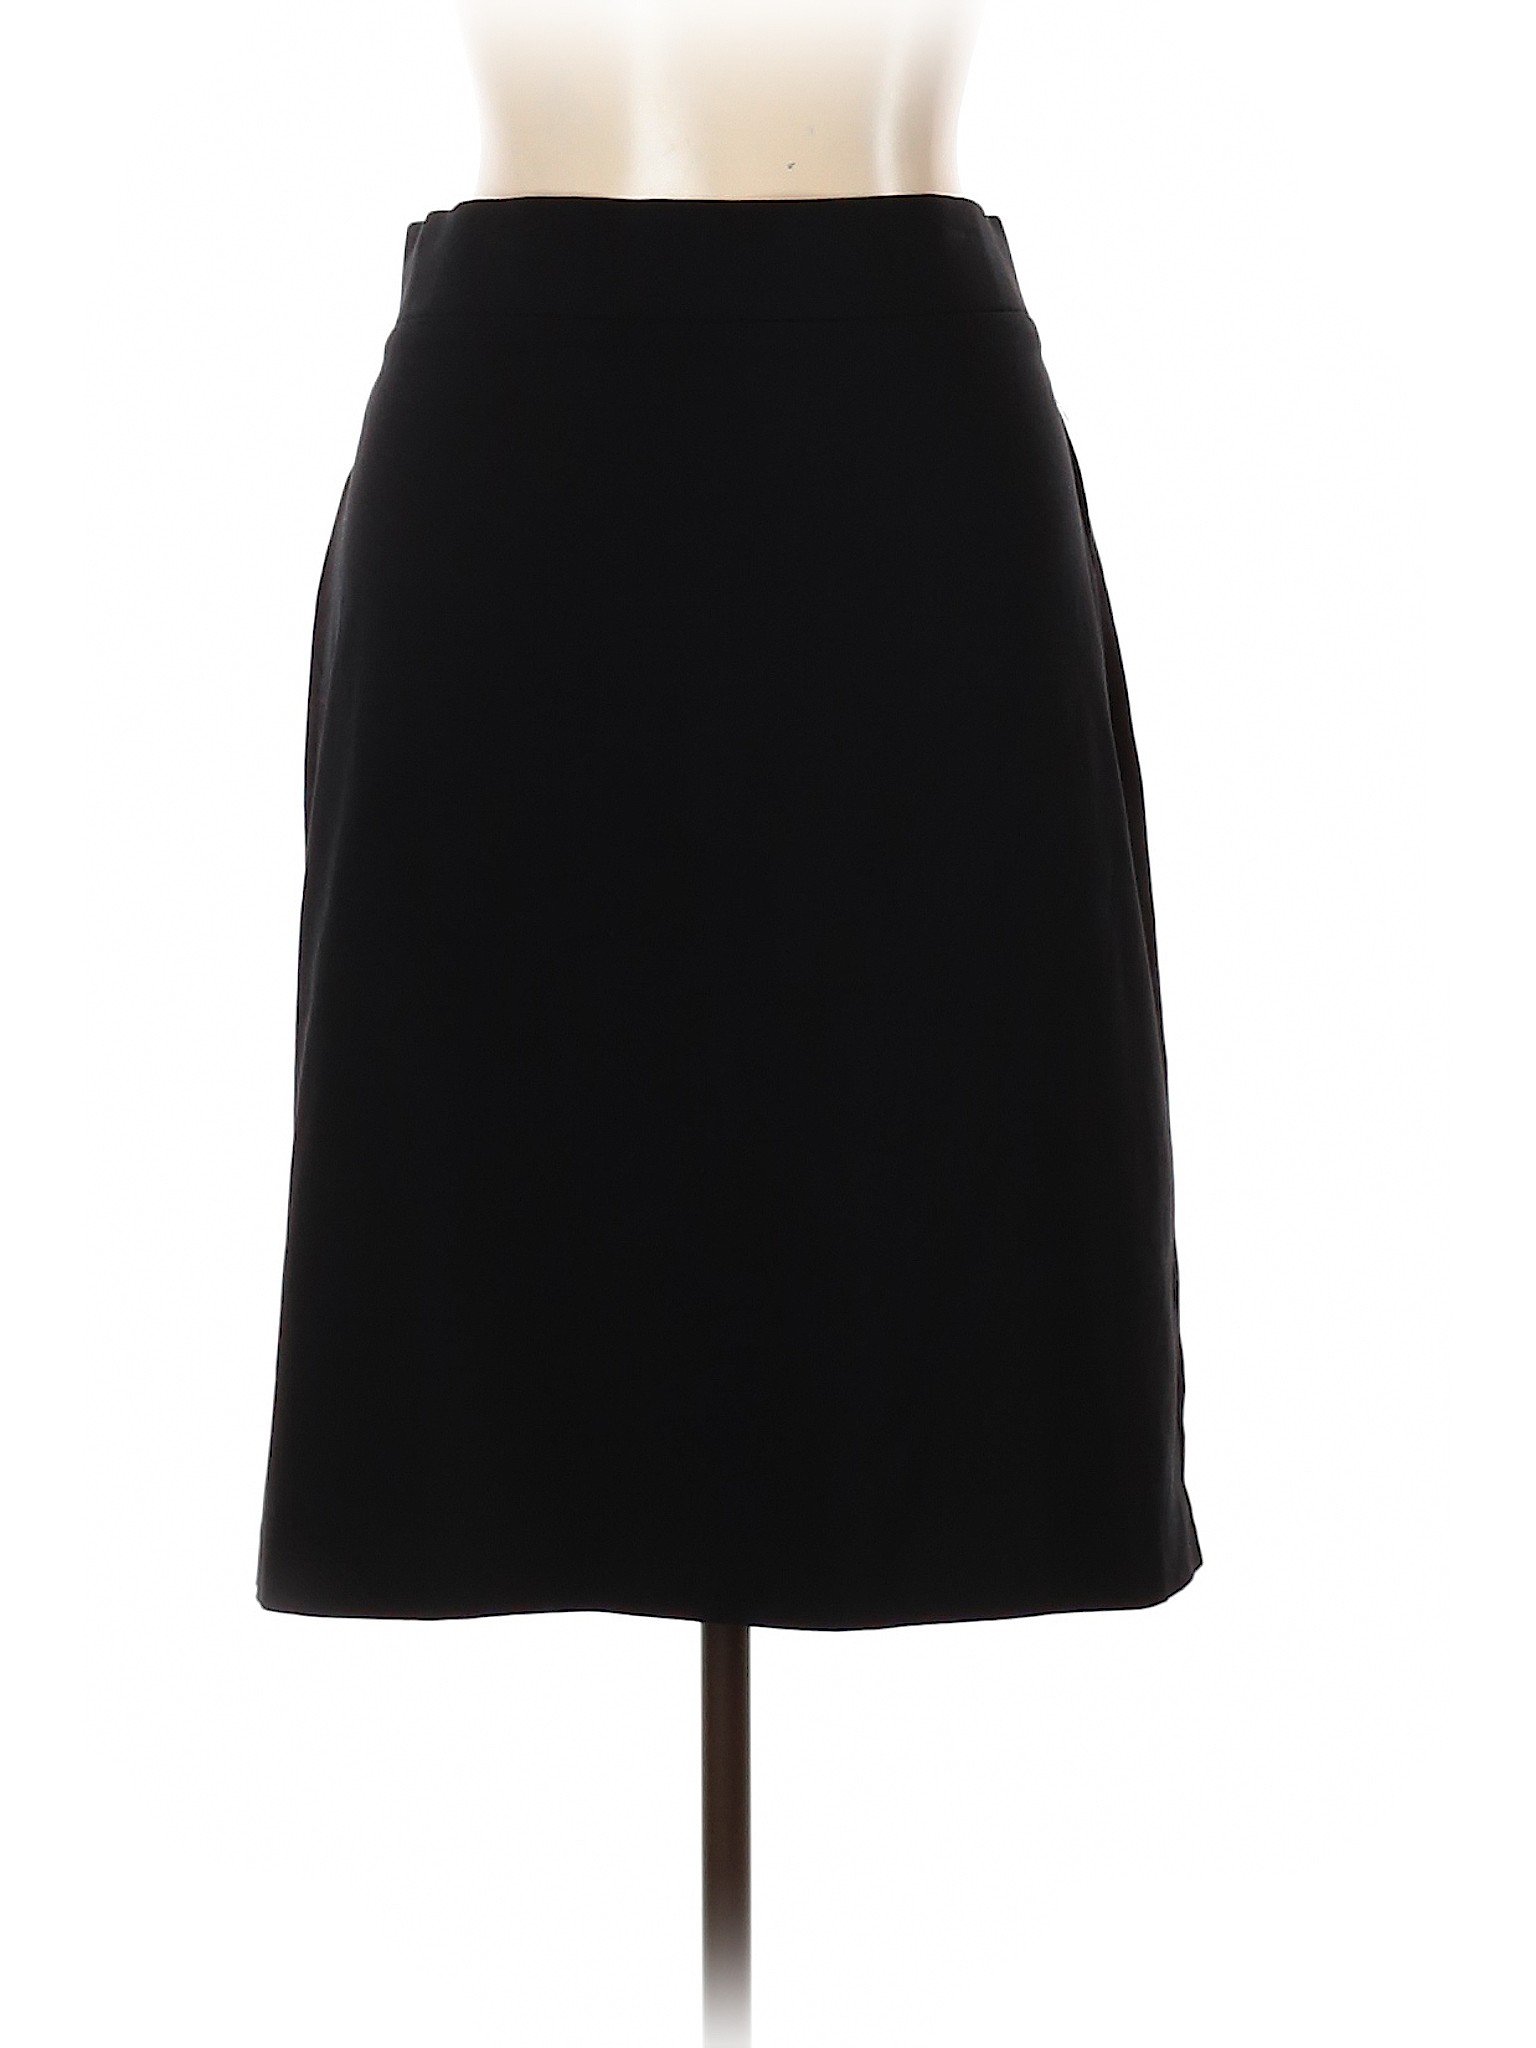 DressBarn Solid Black Casual Skirt Size L - 79% off | thredUP